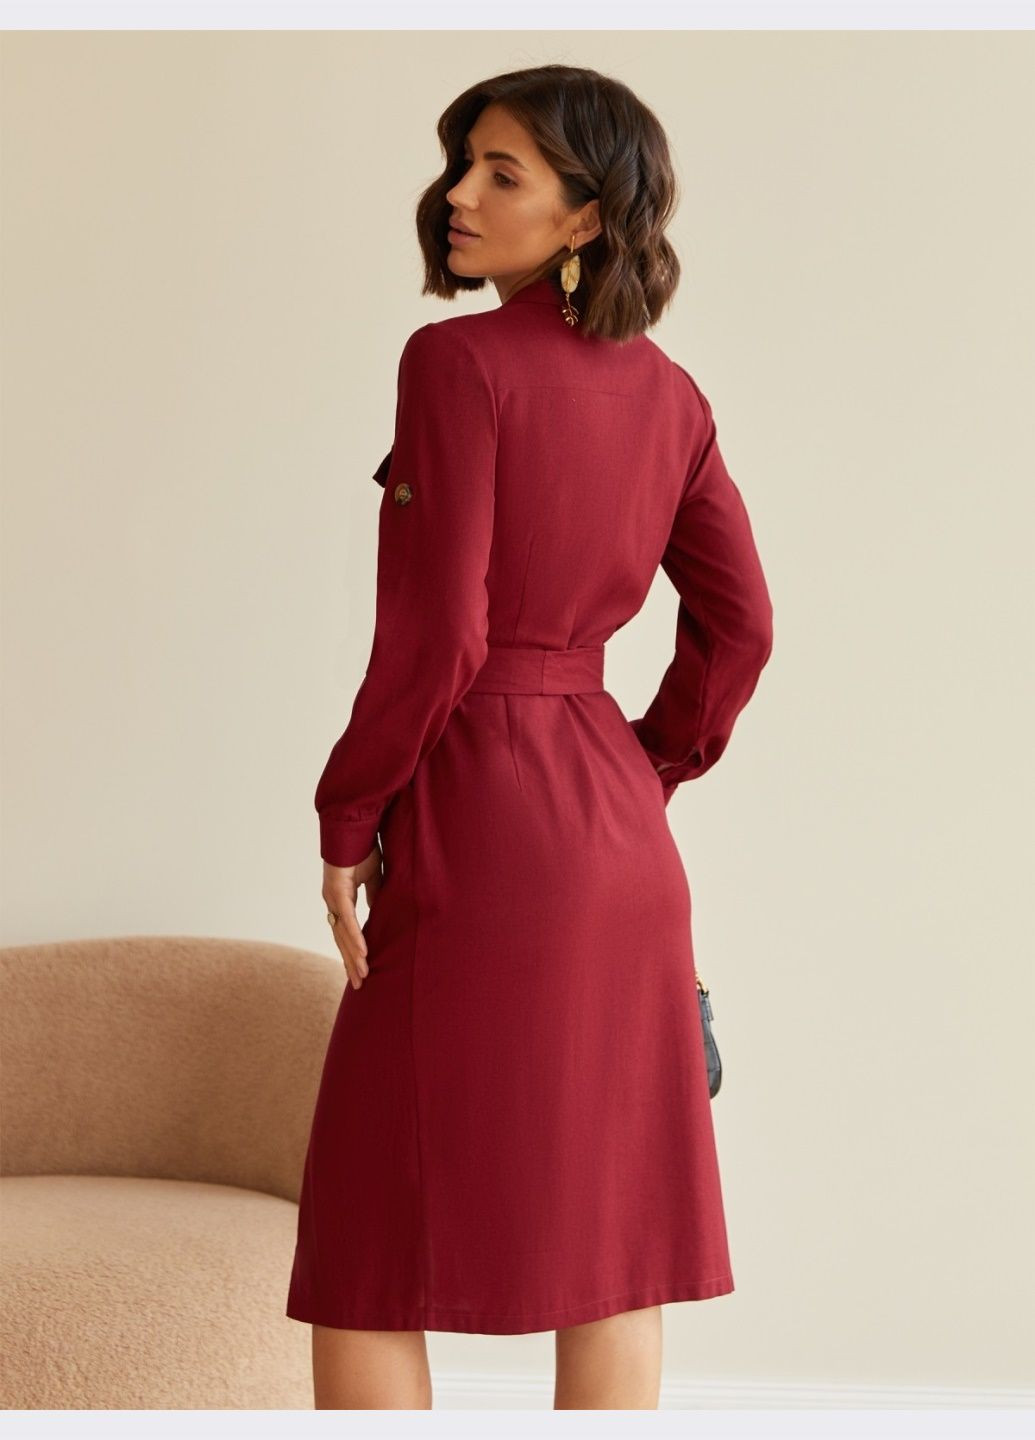 Бордова лляна сукня-сорочка бордового кольору з шльовками на рукавах Dressa